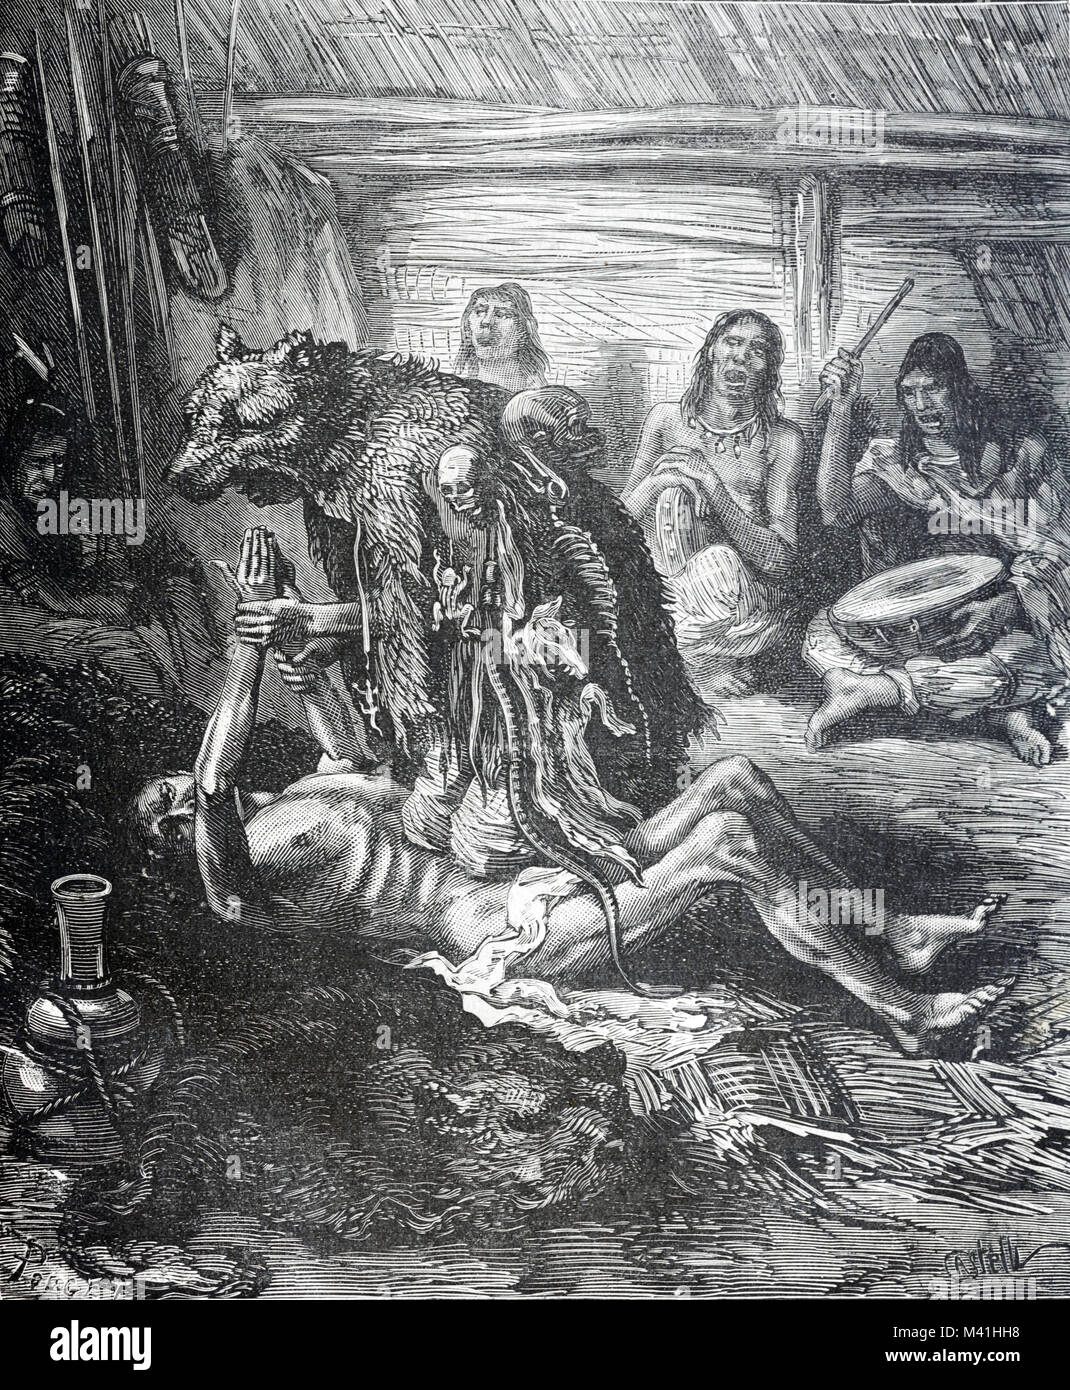 Flathead Native American or Bitterroot Salish Medicine Man, Dressed in Bear Skin, Treating Patient, Montana, USA (Engraving 1879) Stock Photo